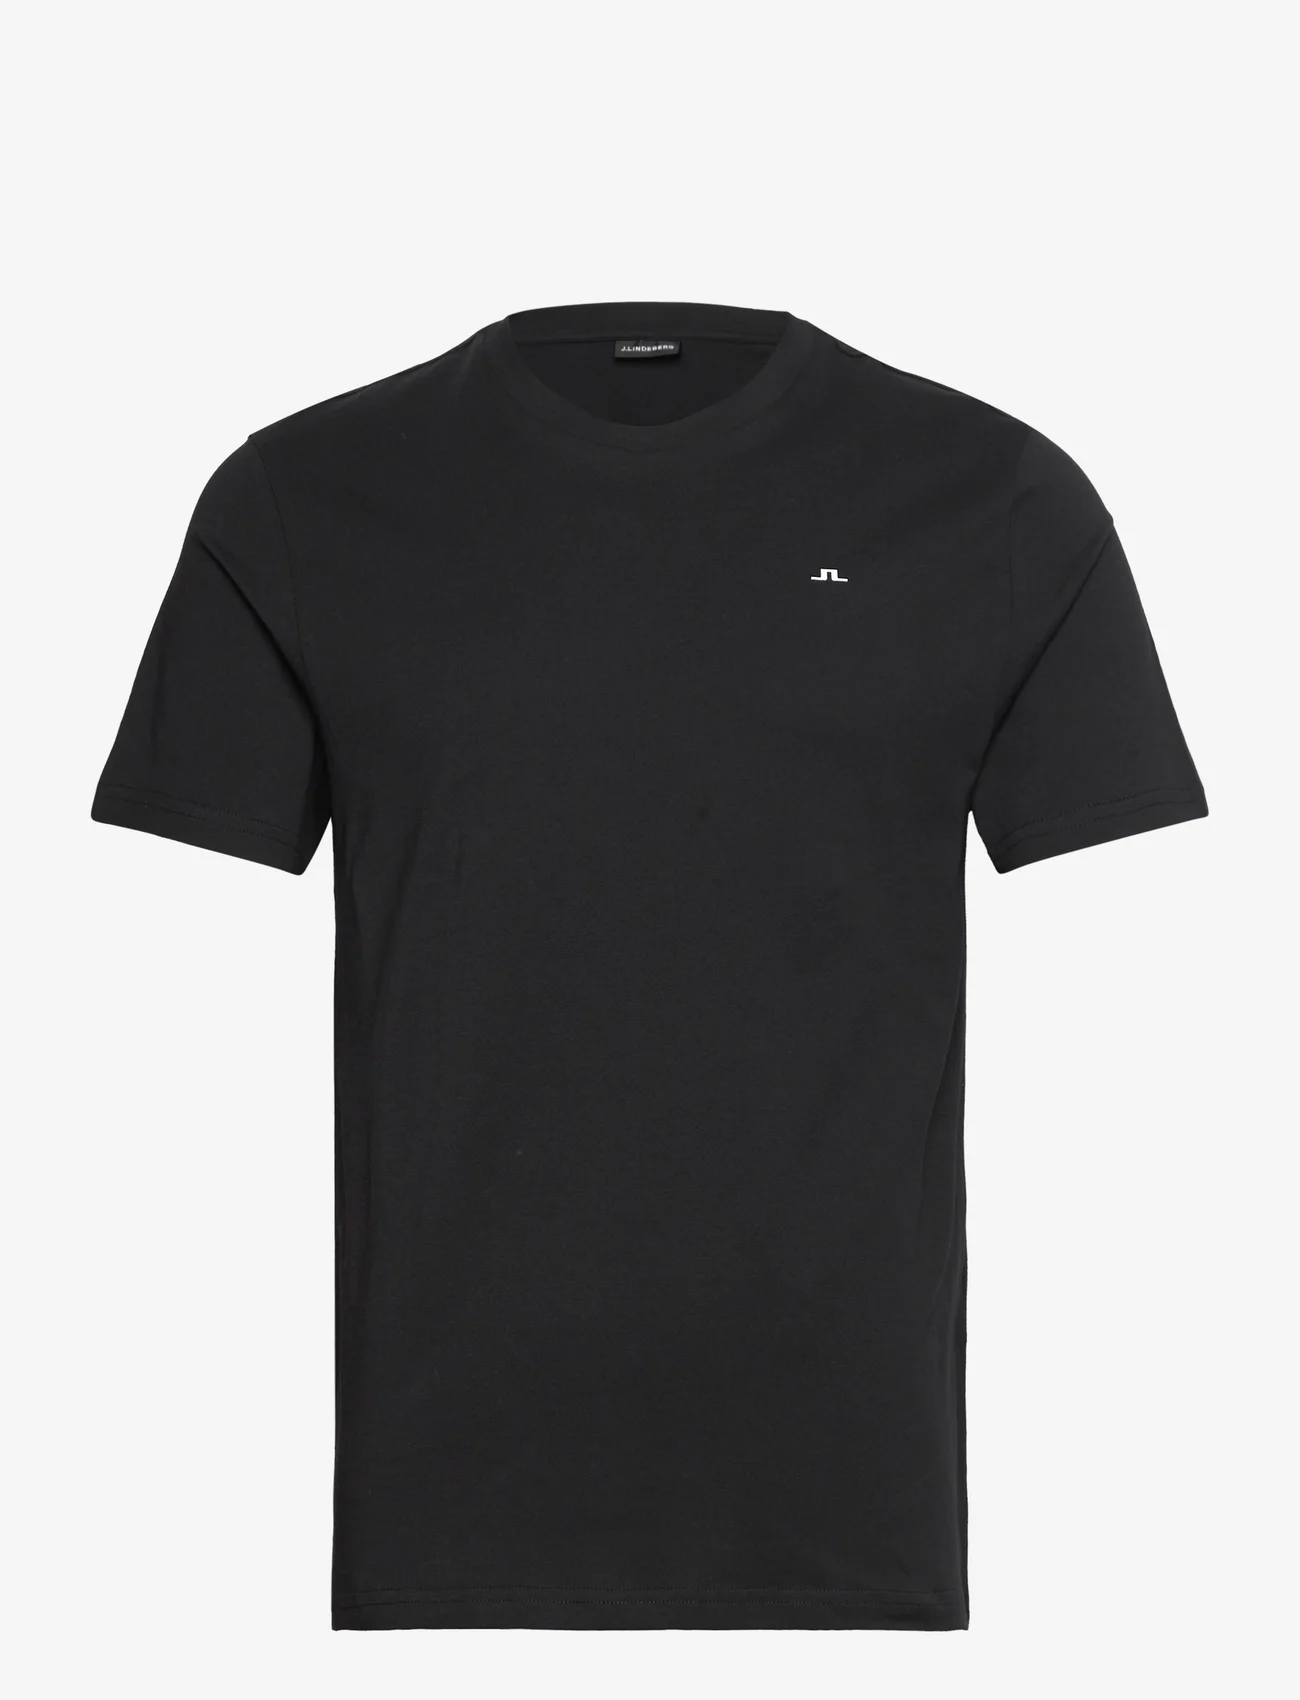 J. Lindeberg - M Cotton Blend T-shirt - krótki rękaw - black - 0